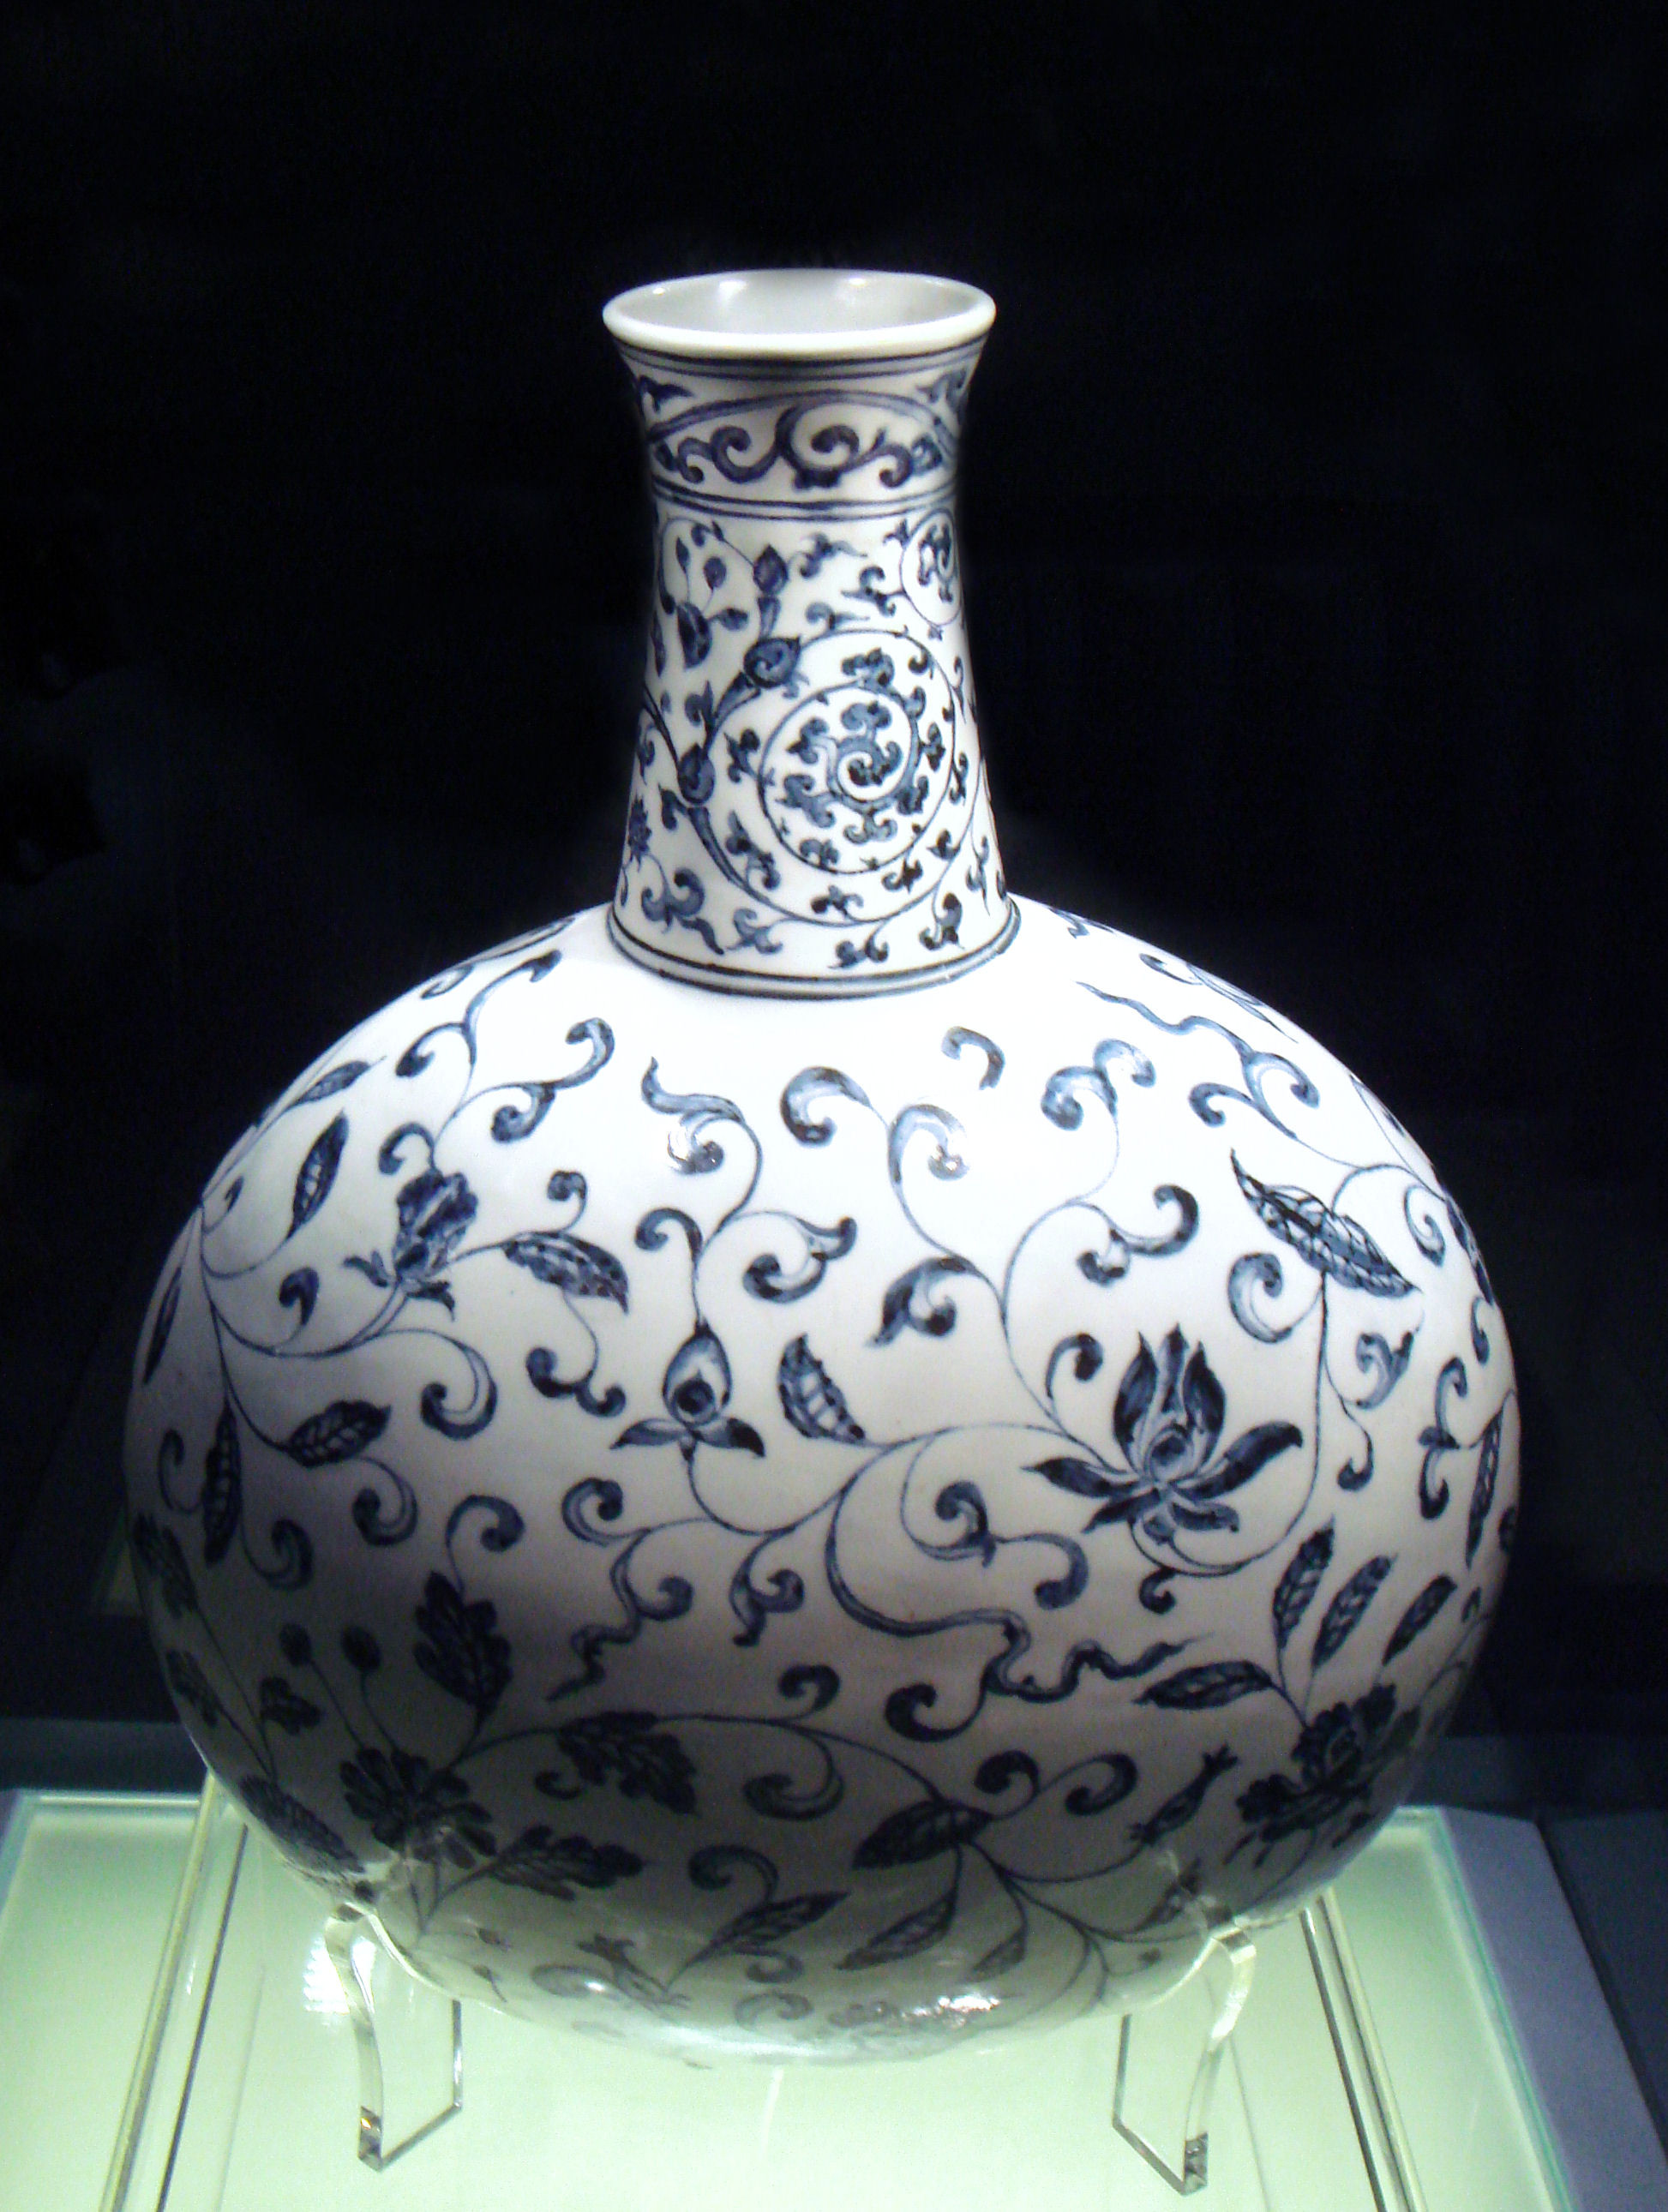 25 Fabulous Light Blue Ceramic Vase 2024 free download light blue ceramic vase of fileblue and white vase jingdezhen ming yongle 1403 1424 with regard to fileblue and white vase jingdezhen ming yongle 1403 1424